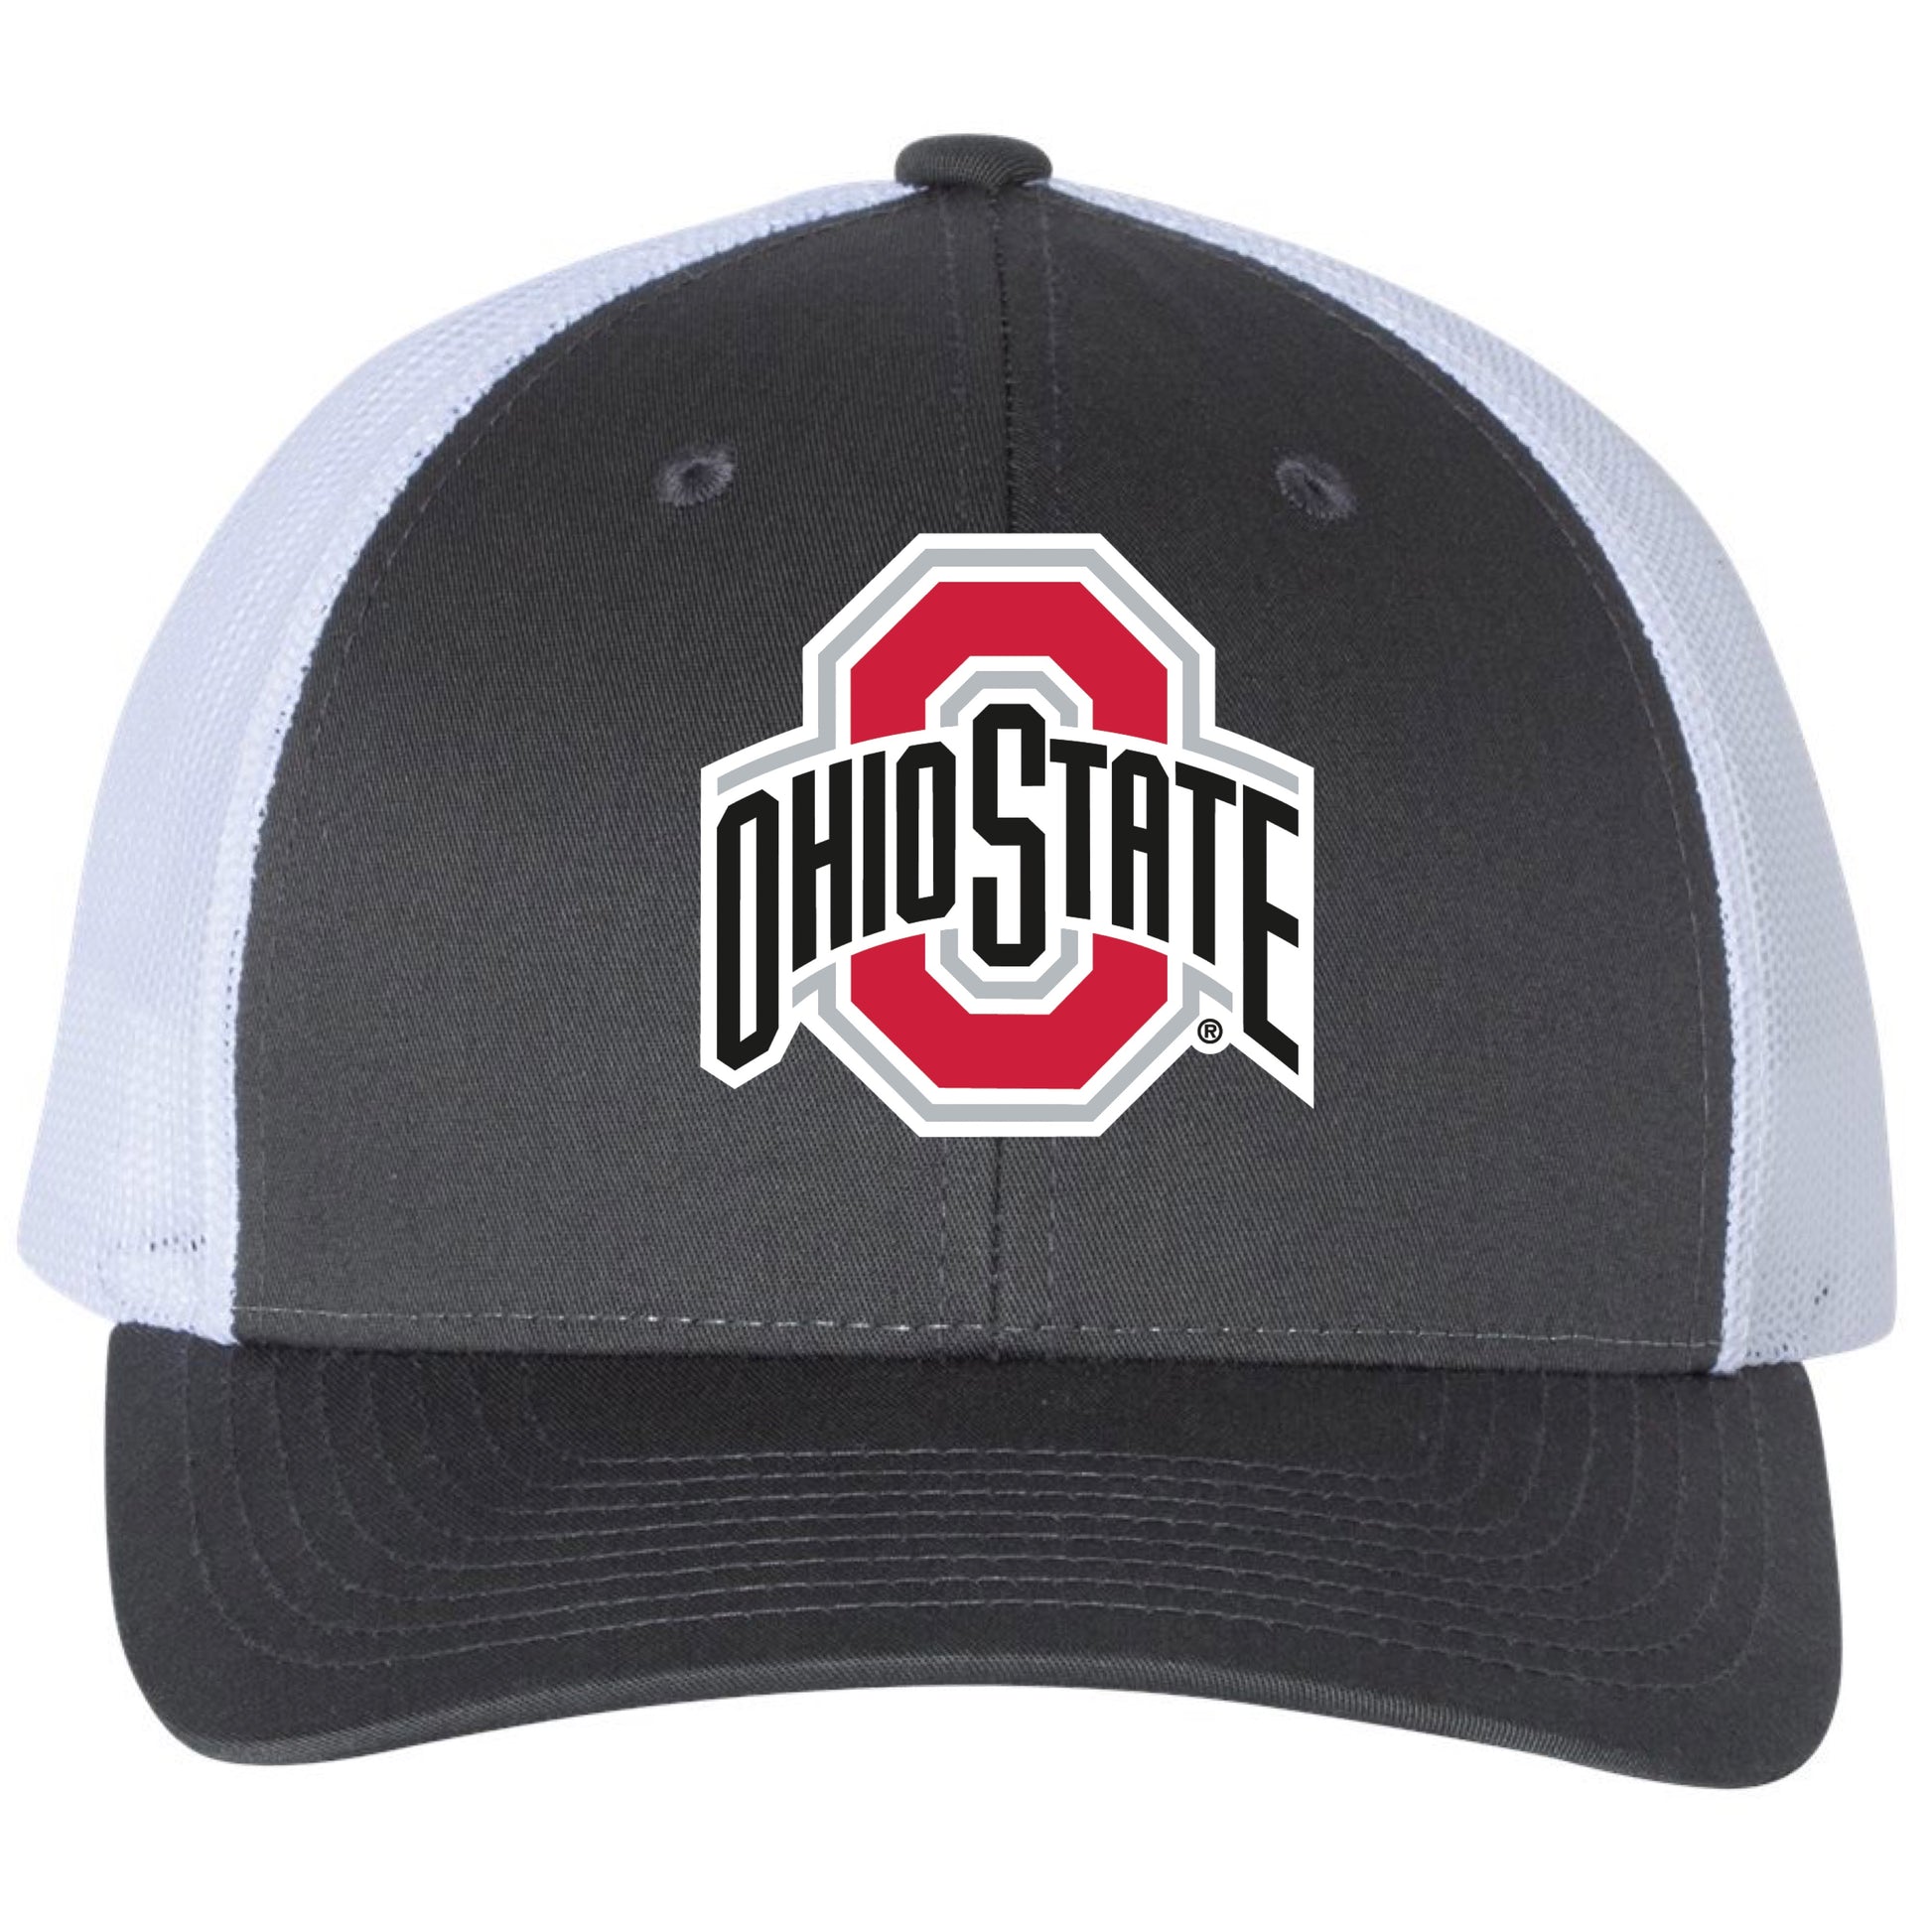 Ohio State Buckeyes 3D Snapback Trucker Hat- Charcoal/ White - Ten Gallon Hat Co.